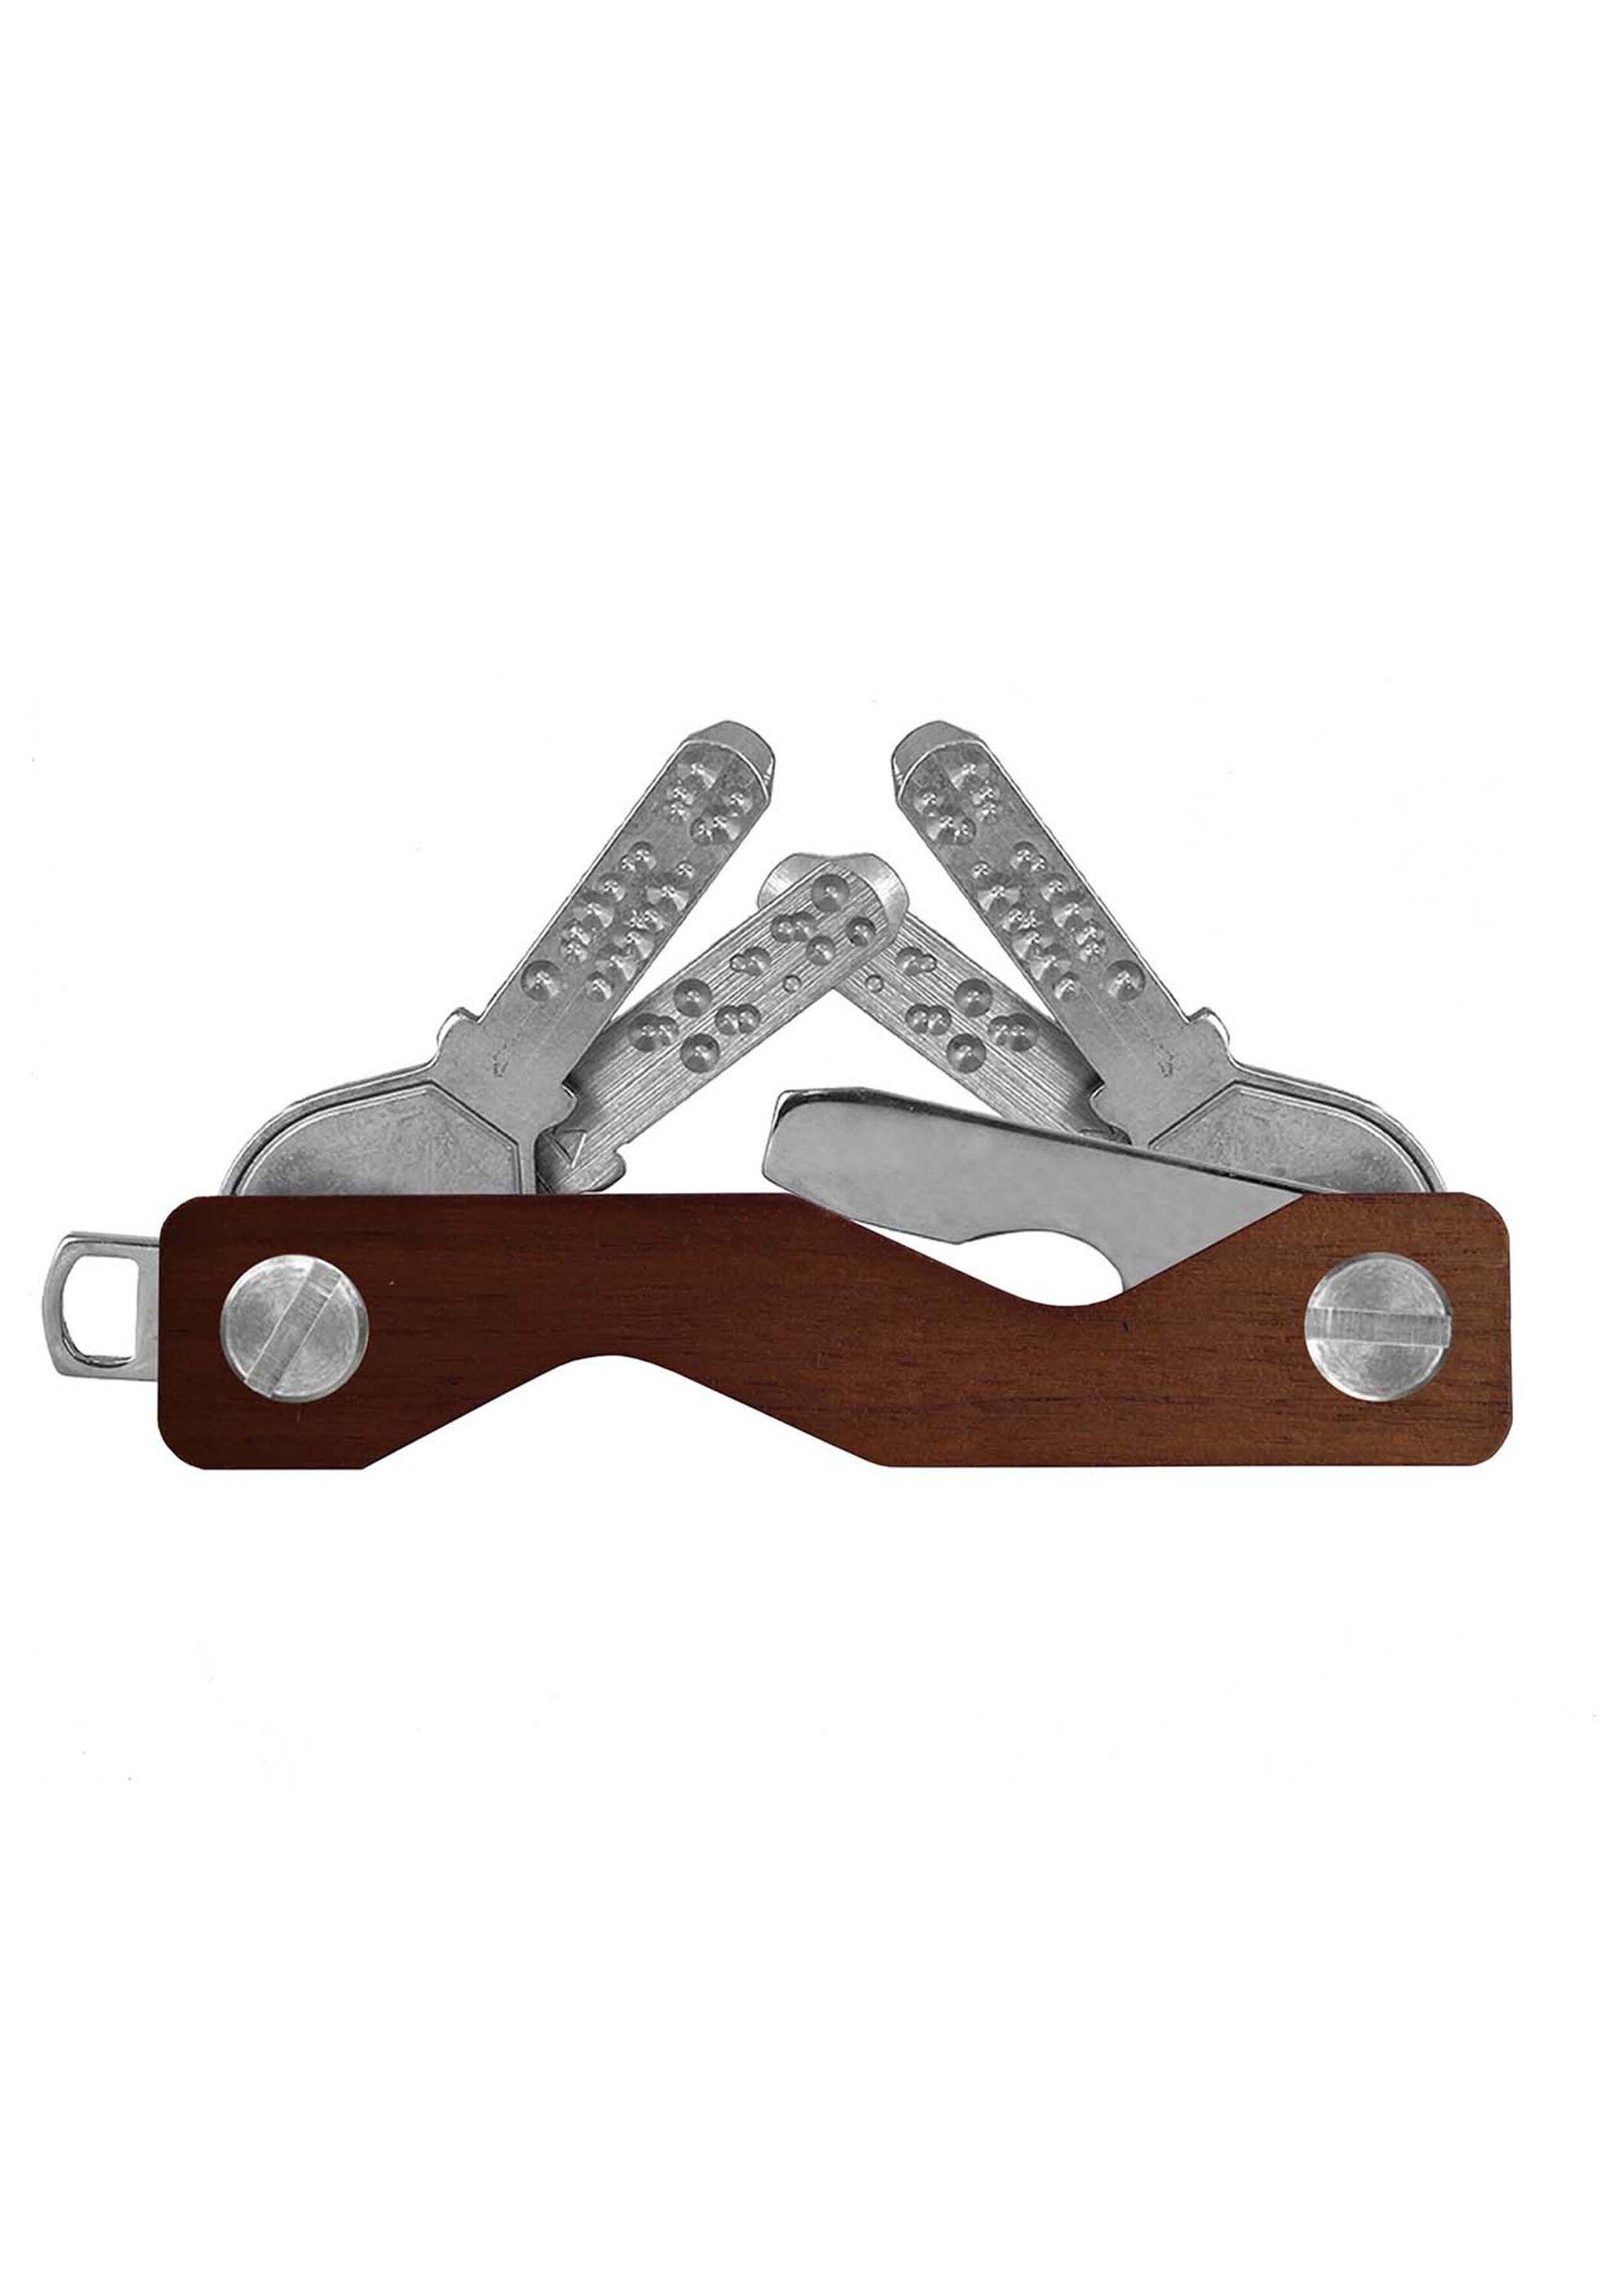 S3, SWISS keycabins Schlüsselanhänger braun made Wood